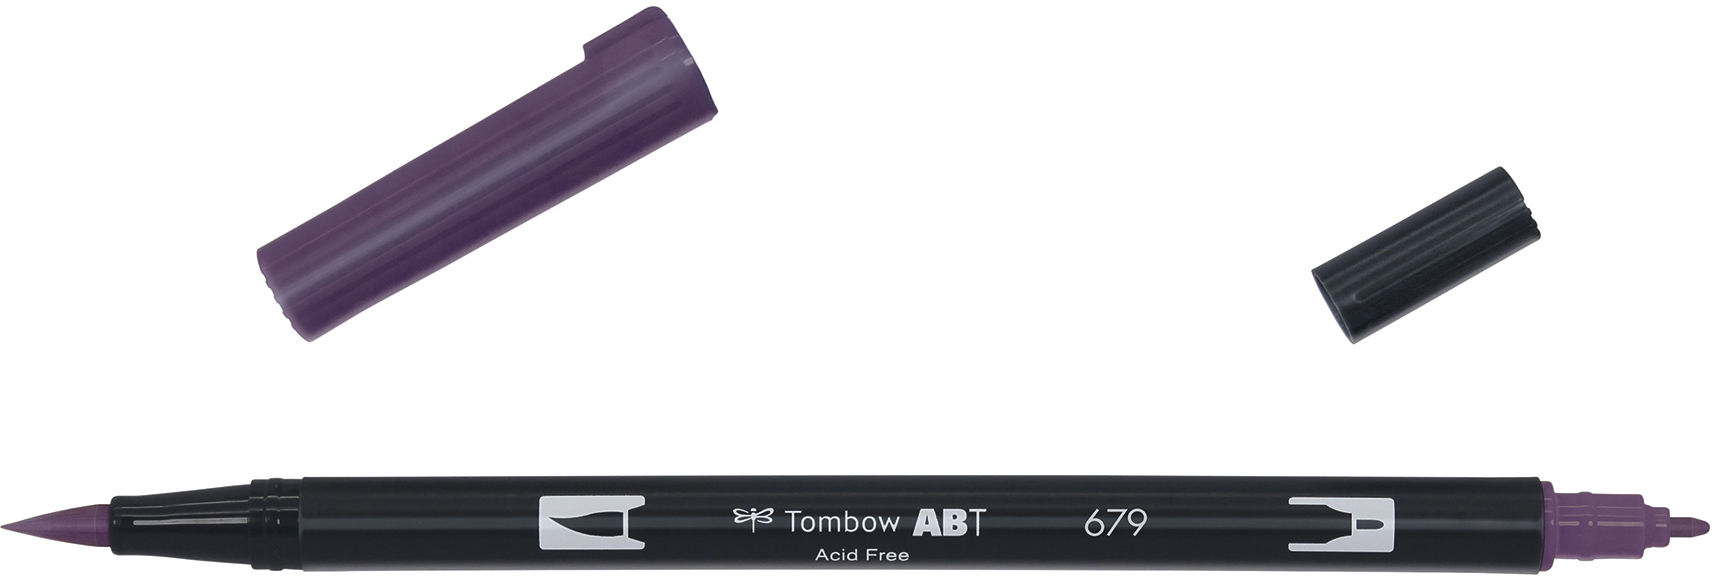 TOMBOW Dual Brush Pen ABT 679 prum sombre